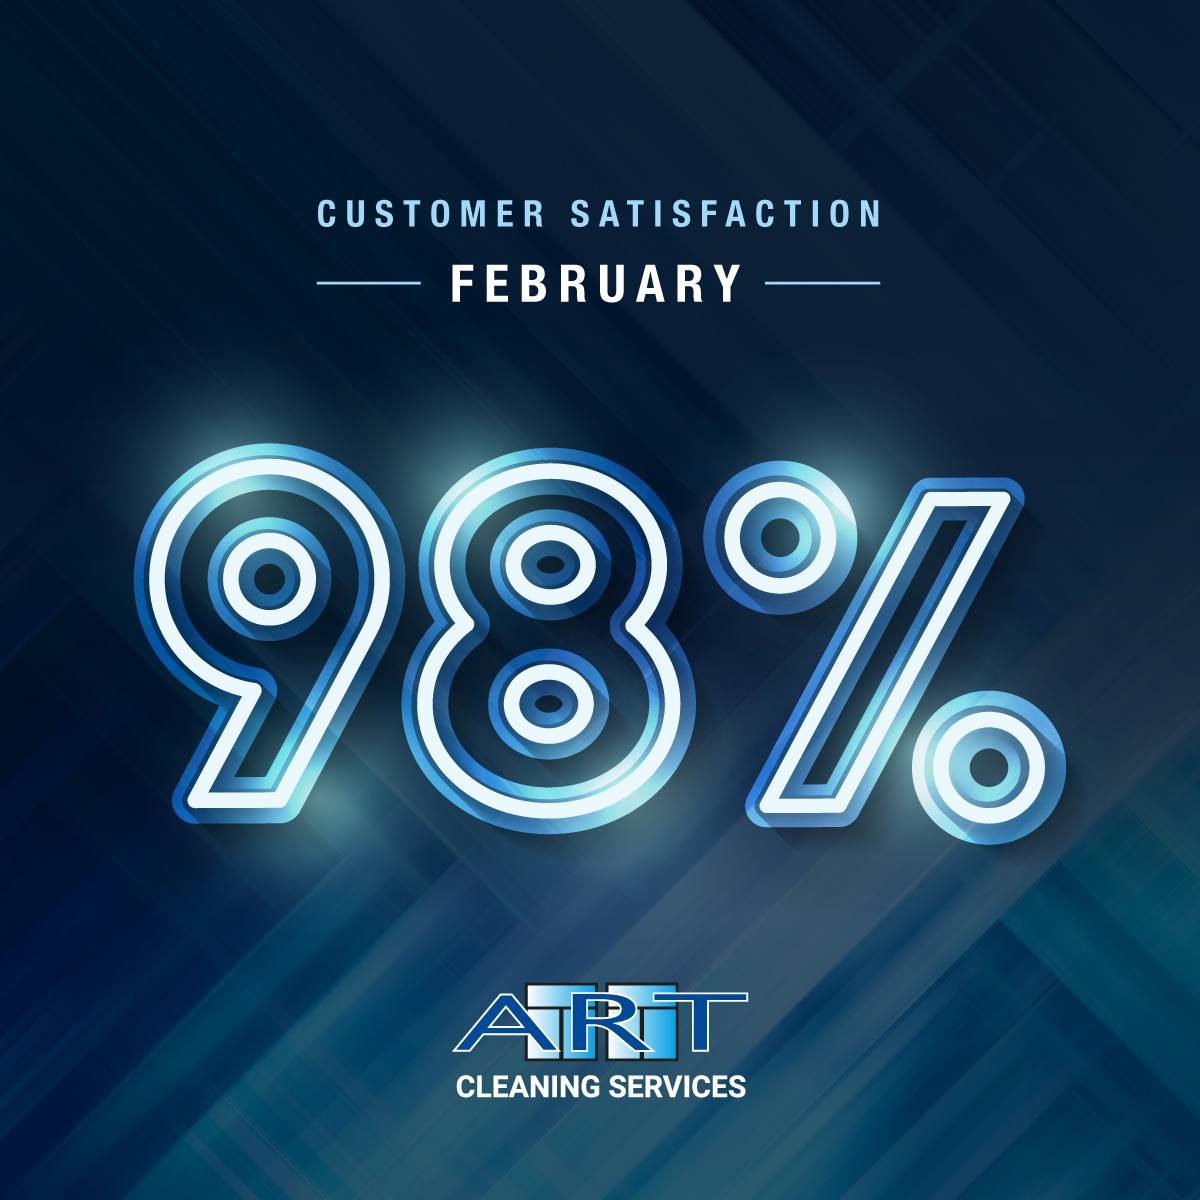 Feb Customer Satisfaction 98%